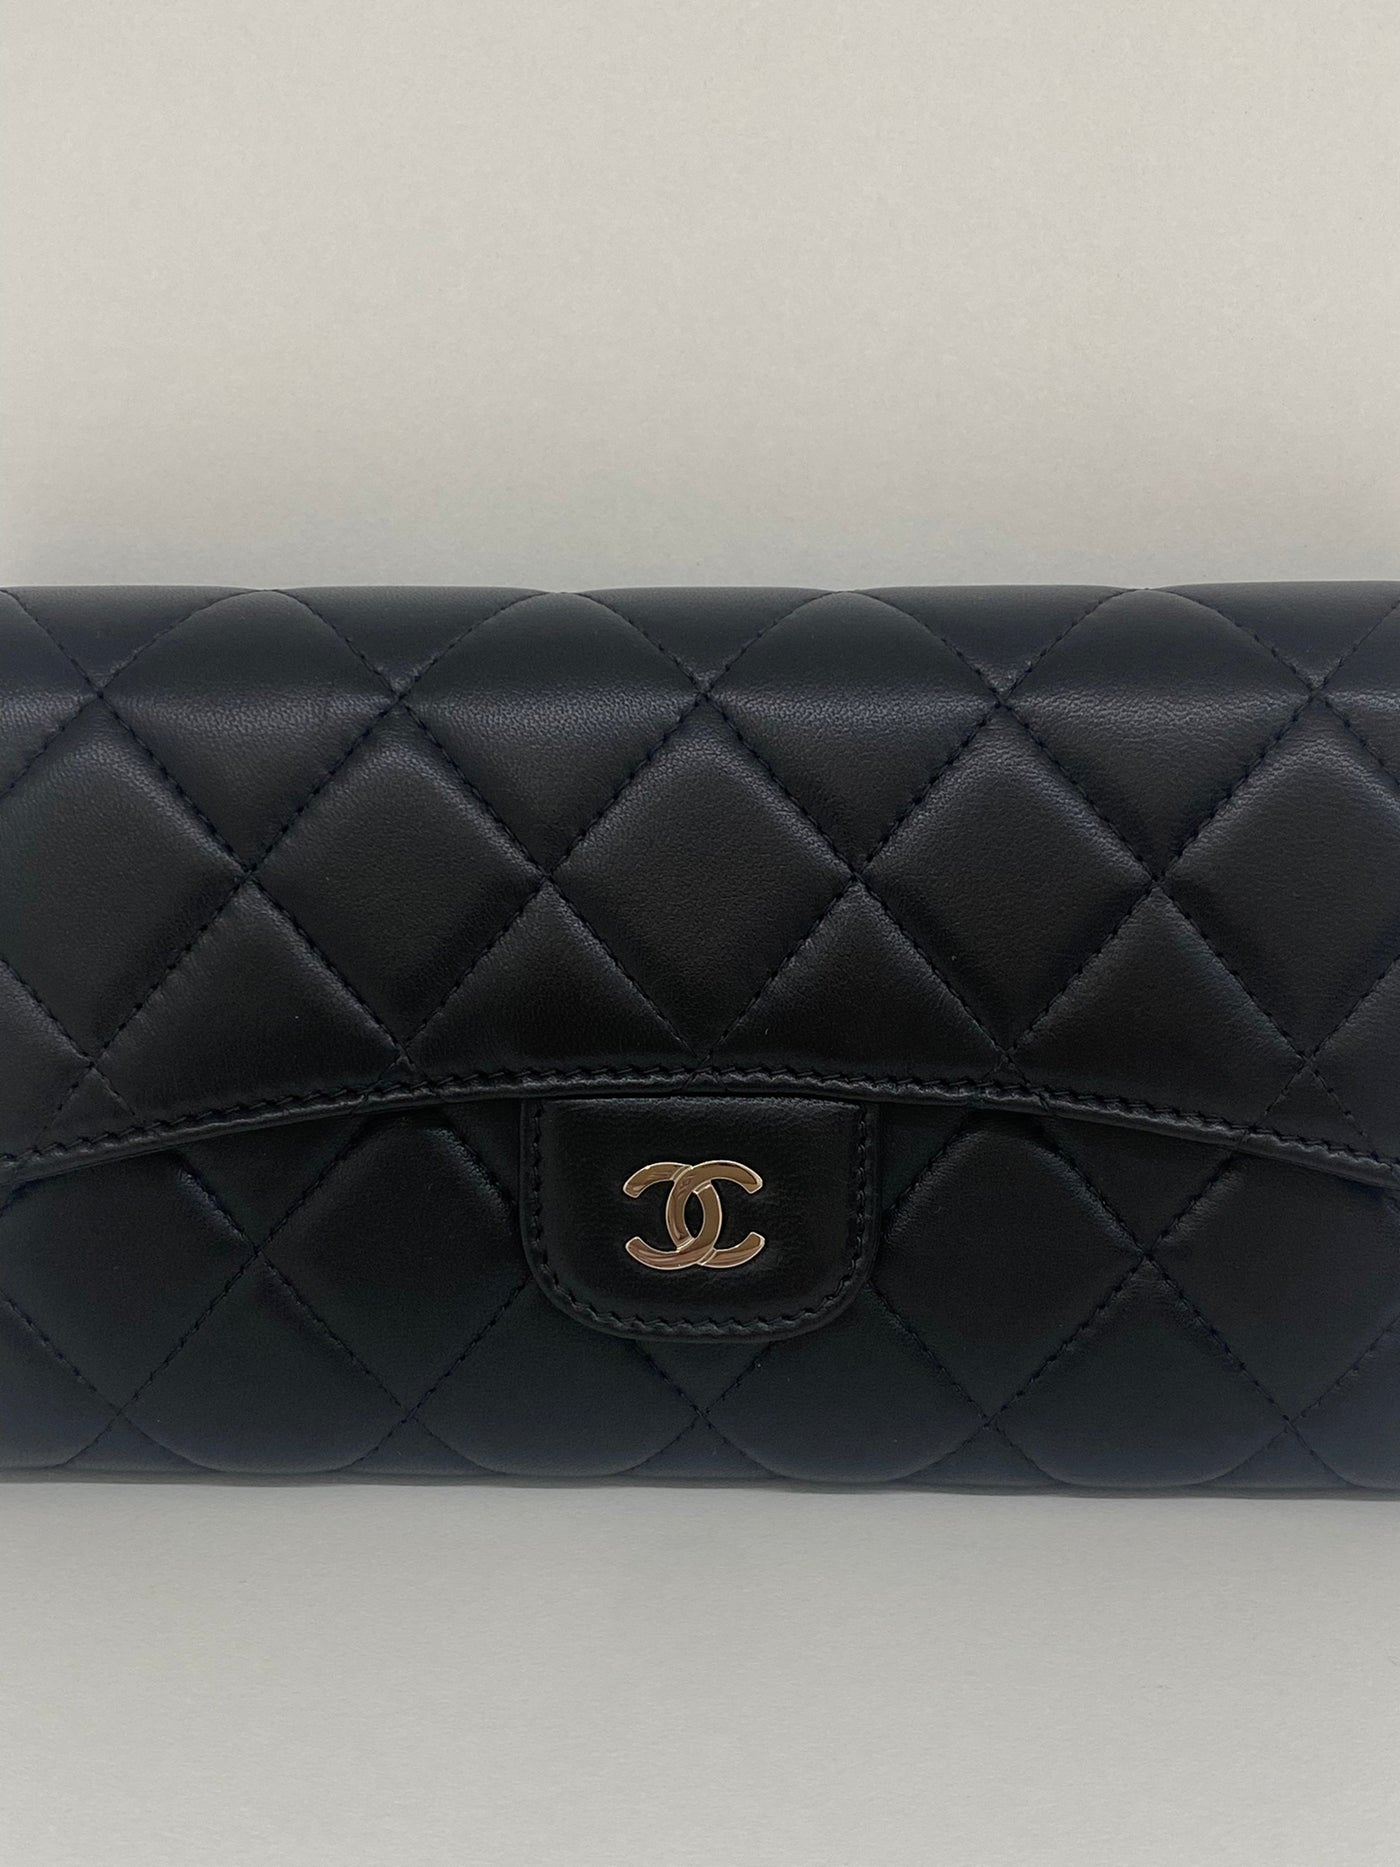 Chanel Classic Flap Black Wallet SHW - SOLD